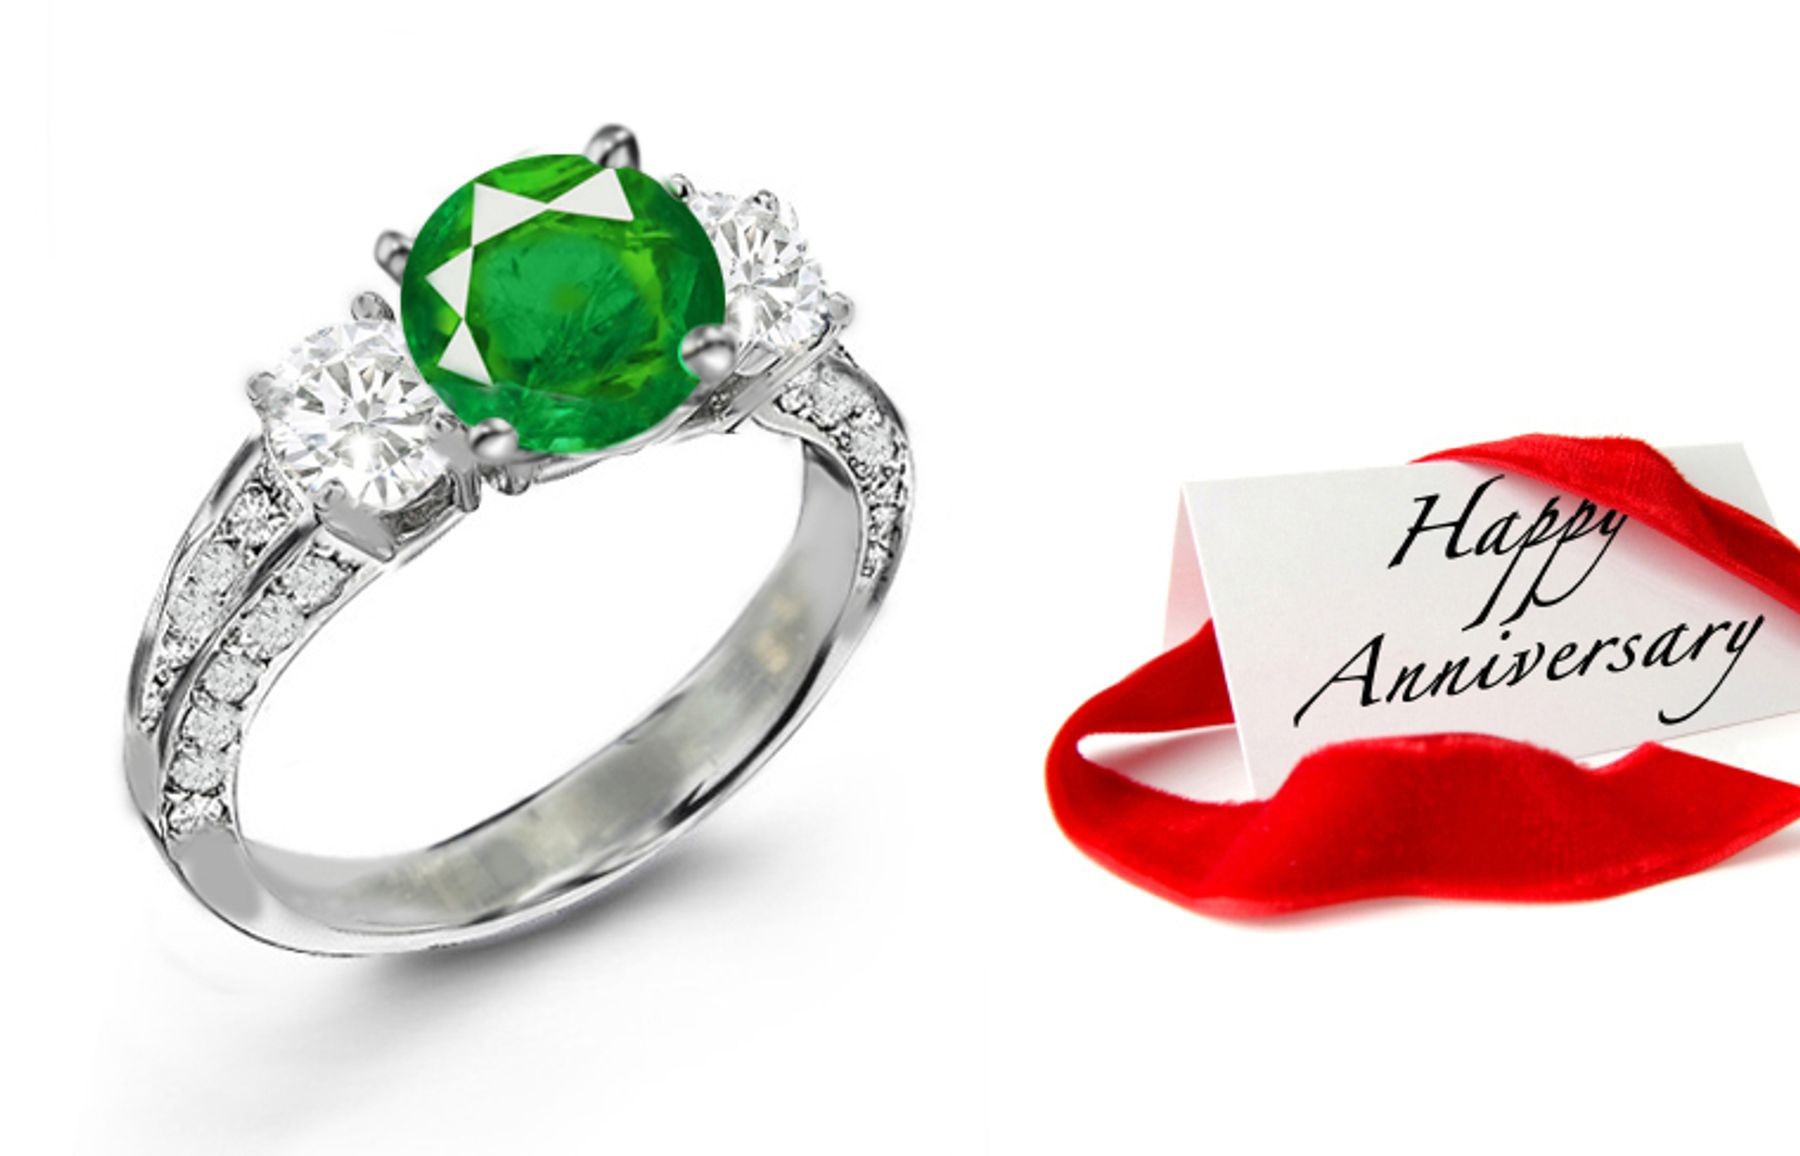 Three-stone Diamond Rings: Three-stone Half Hoop Ring Featuring Brilliant-Cut Round Diamonds & Richly Cut Emerald